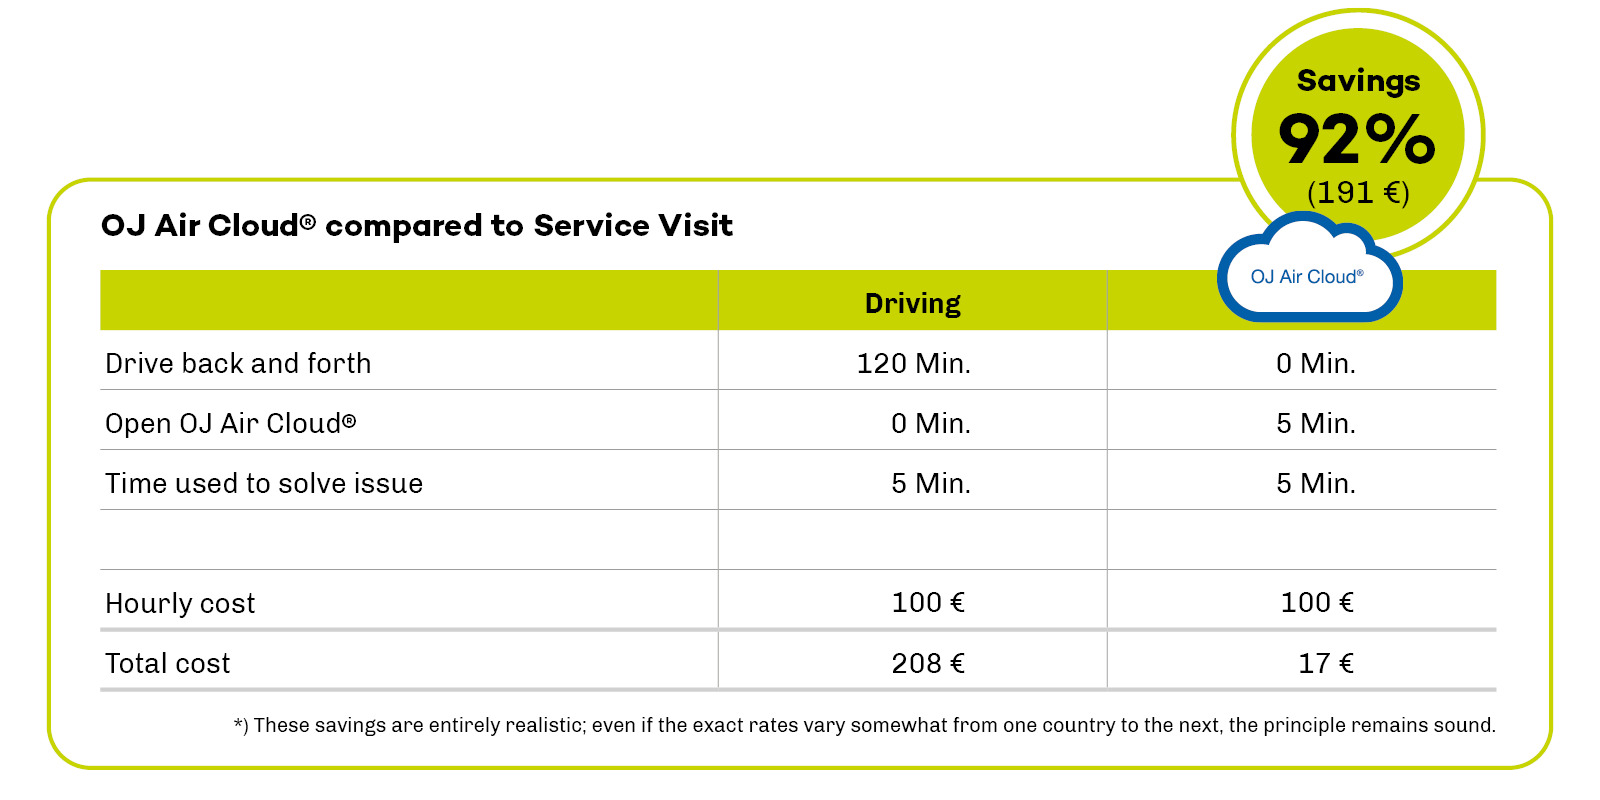 OJ Air Cloud compared to Service Visit